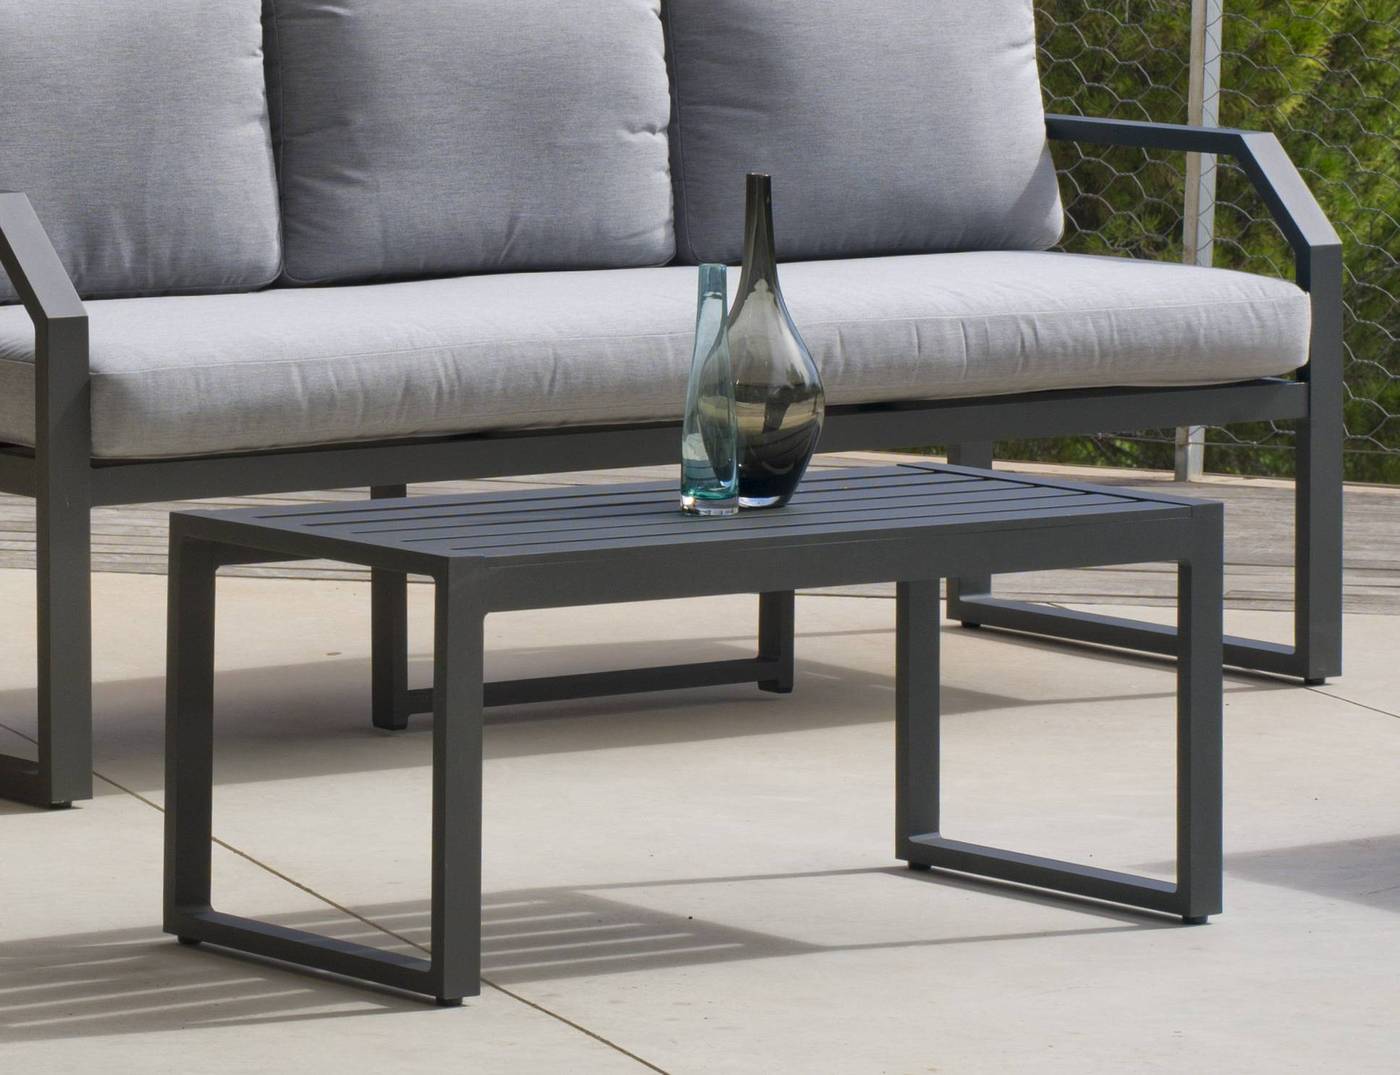 Conjunto Aluminio Génova-8 - Conjunto aluminio luxe: 1 sofá de 3 plazas + 2 sillones + 1 mesa de centro + cojines. Disponible en color blanco, plata o antracita.